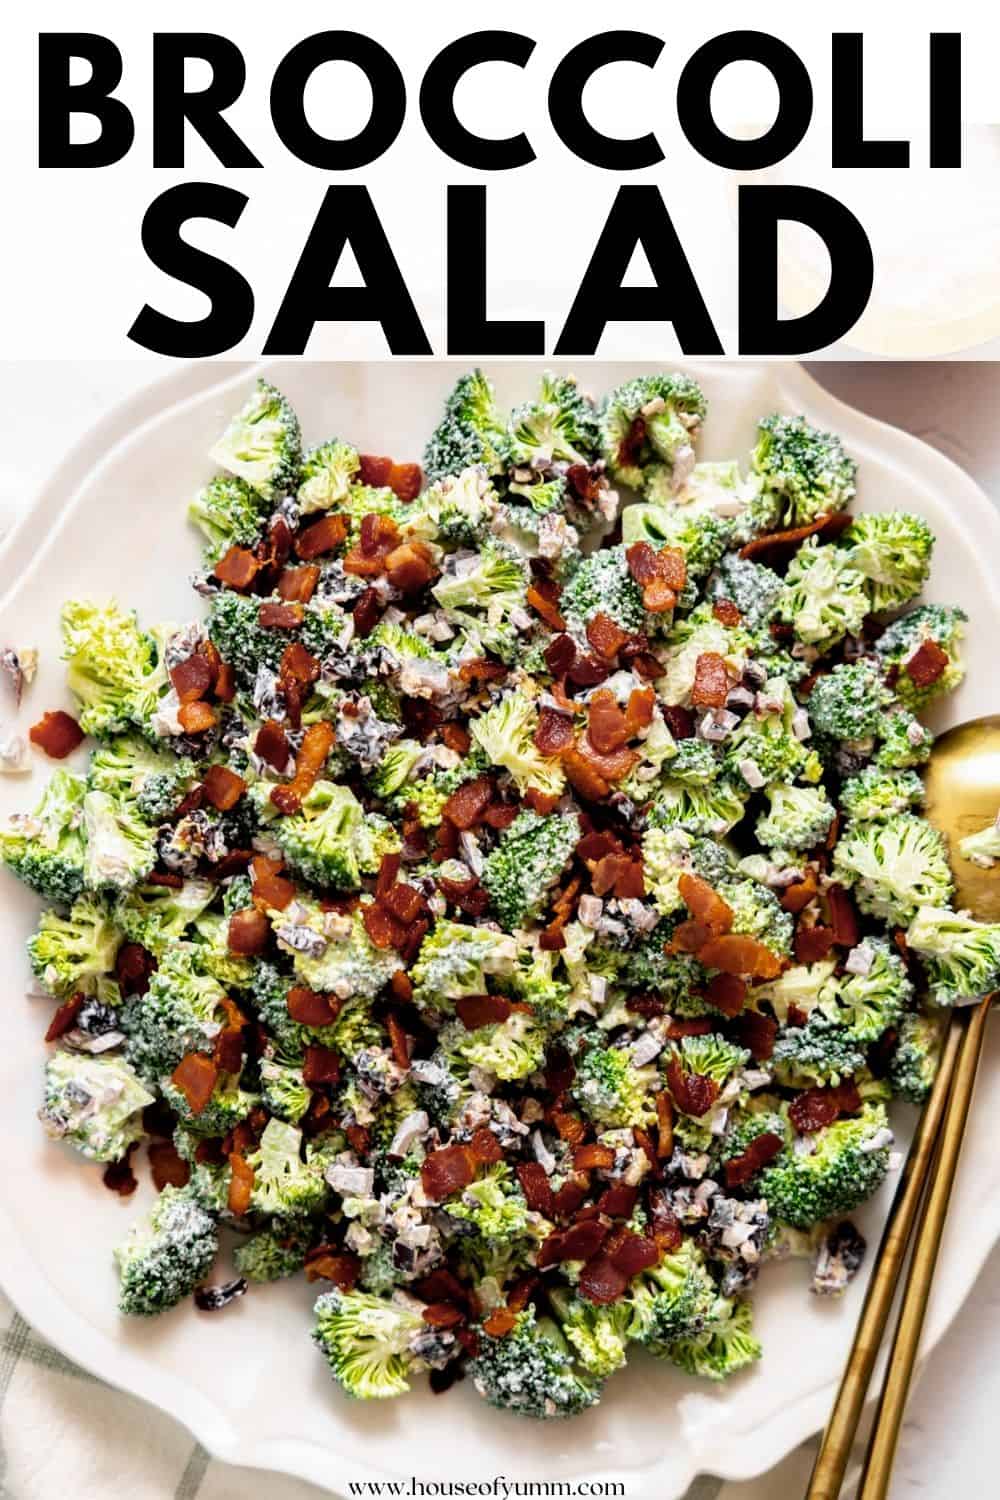 Broccoli salad with text.